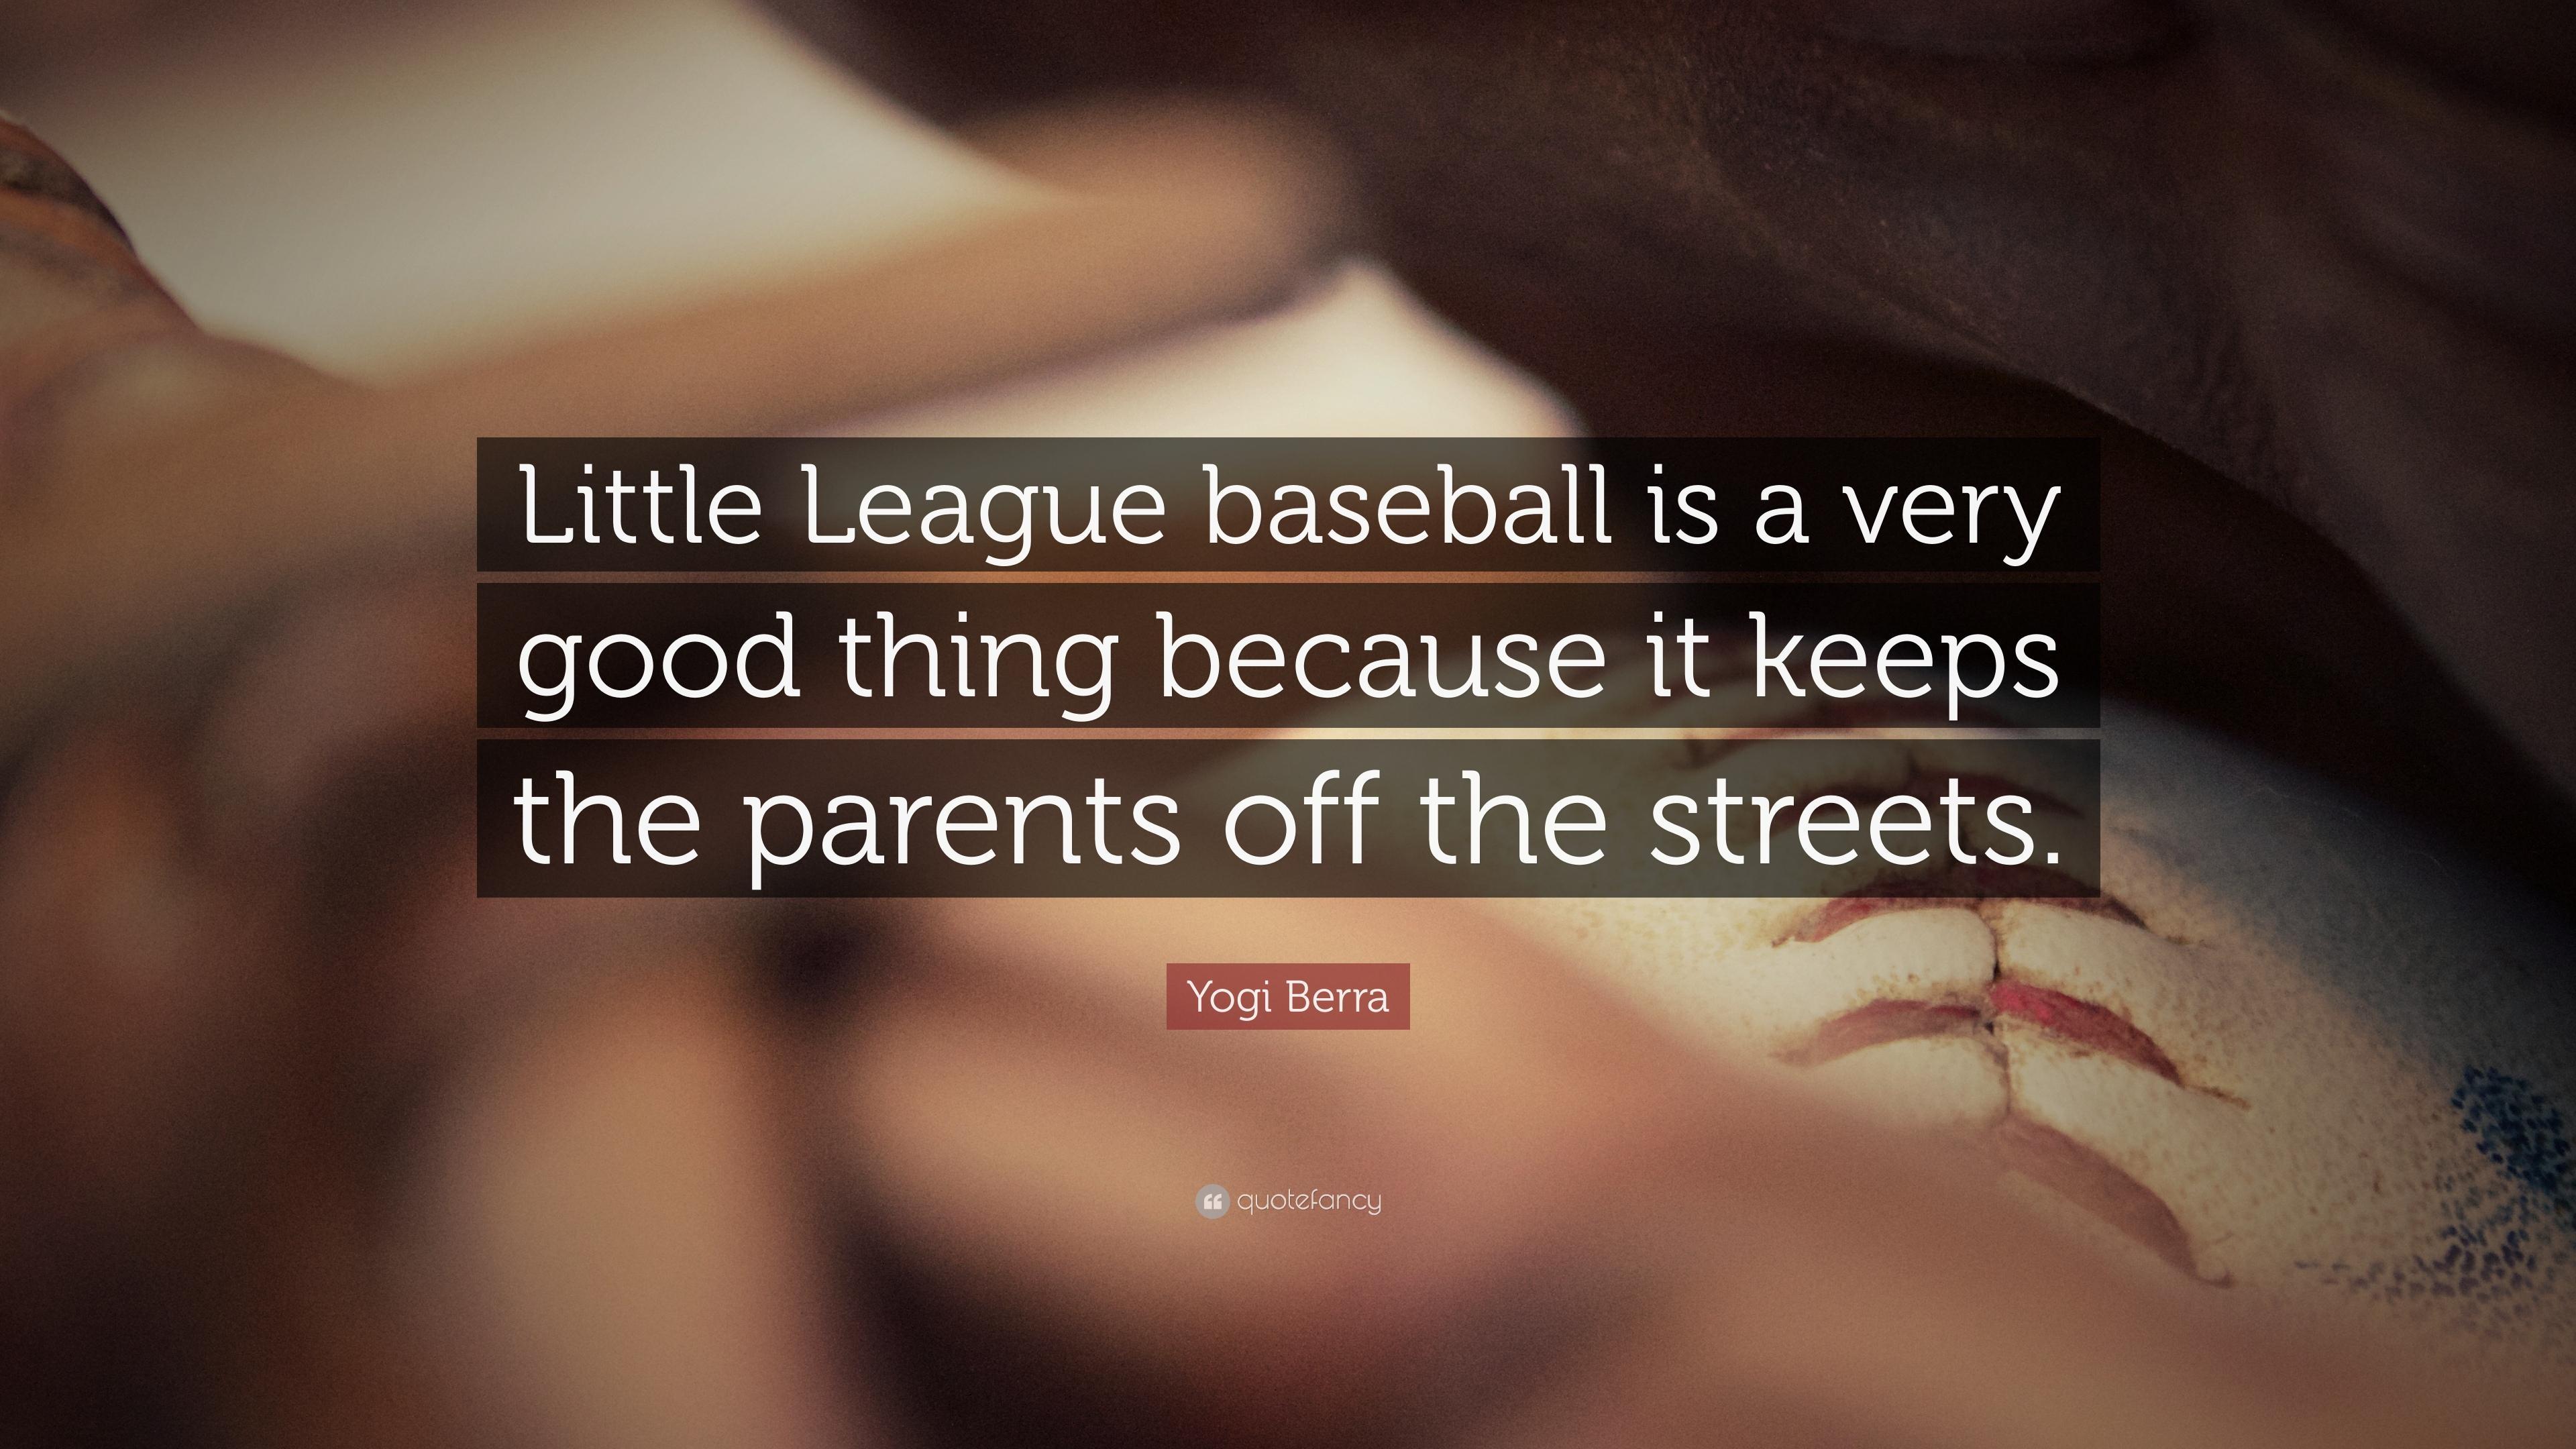 Yogi Berra Quote: “Little League baseball is a very good